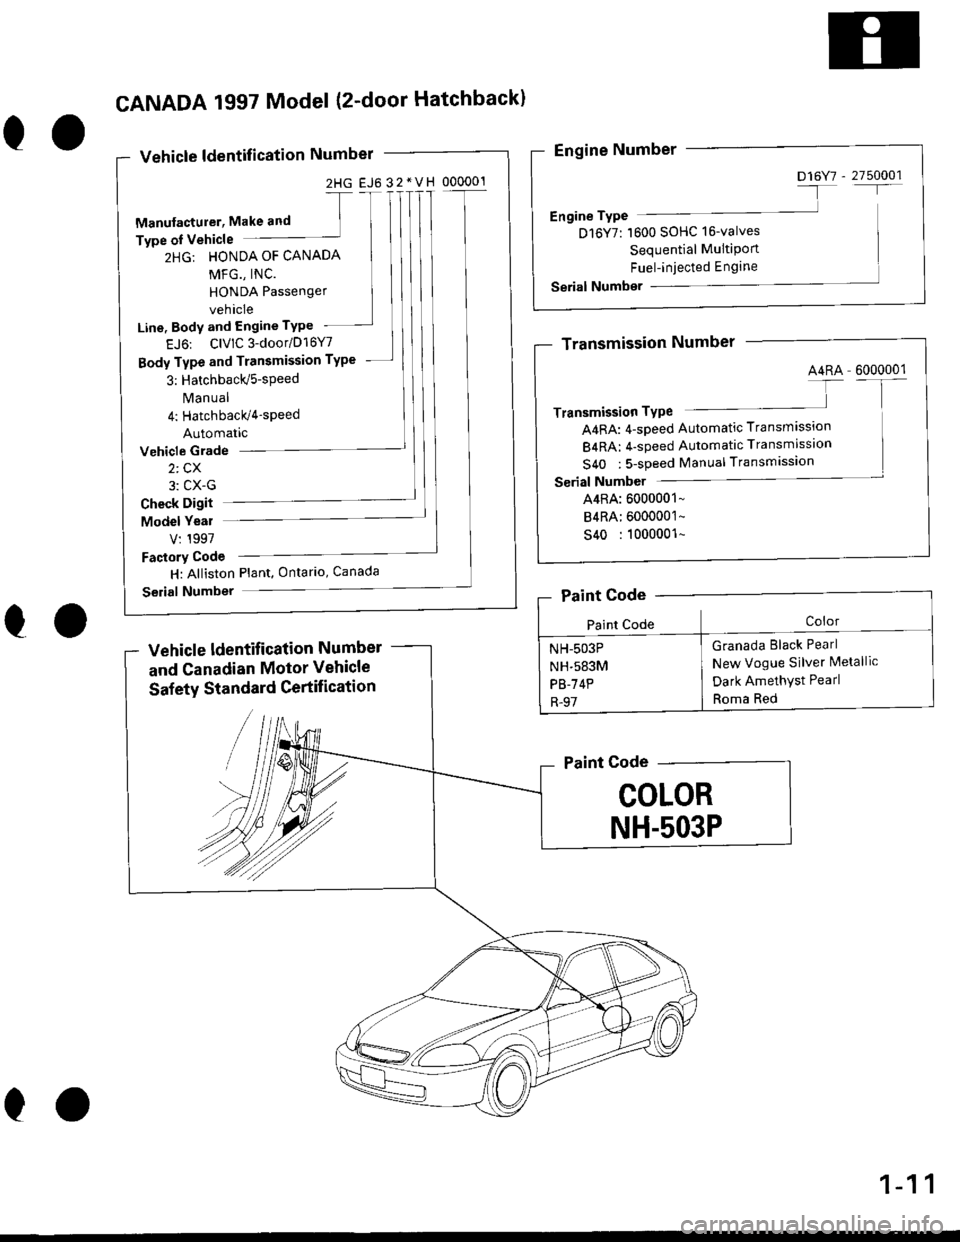 HONDA CIVIC 1999 6.G User Guide 2HG EJ6 32*VH 000001
eo
CANADA 1997 Model (2-door Hatchbackl
Vehicle ldentification Number
-[
Manufacturer, Make and ]Type oI Vehicle
2HG: HONDA OF CANADA
MFG., INC.
HONDA Passenger
vehicle
Line, Body